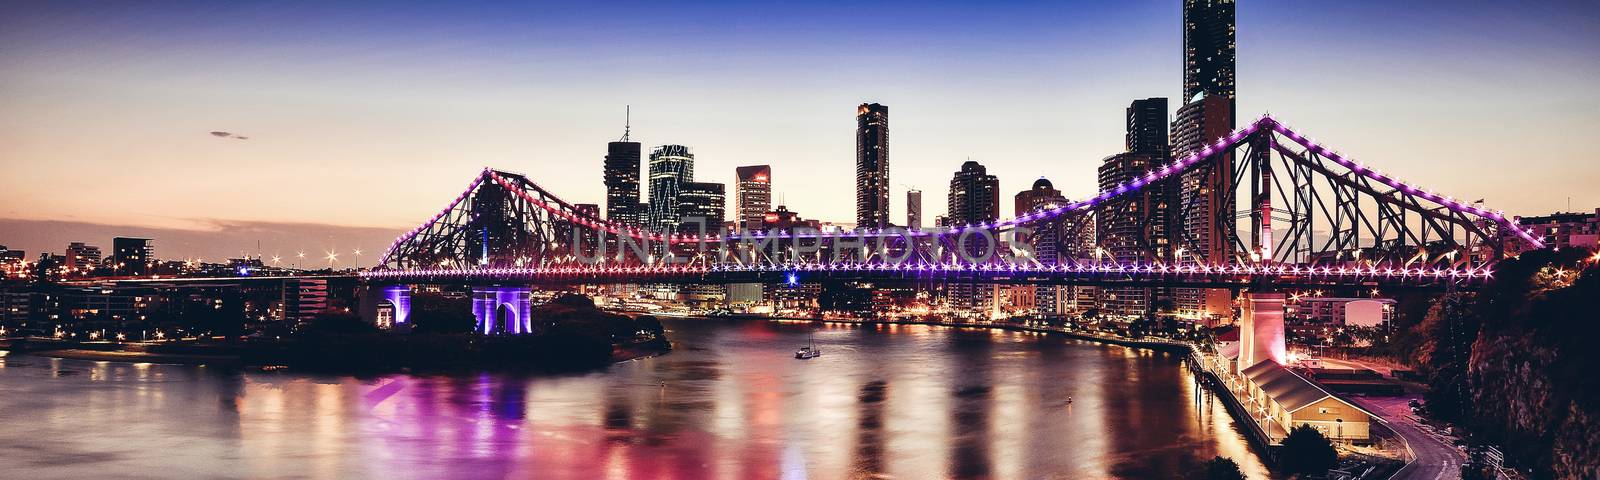 Iconic Story Bridge in Brisbane, Queensland, Australia. by artistrobd